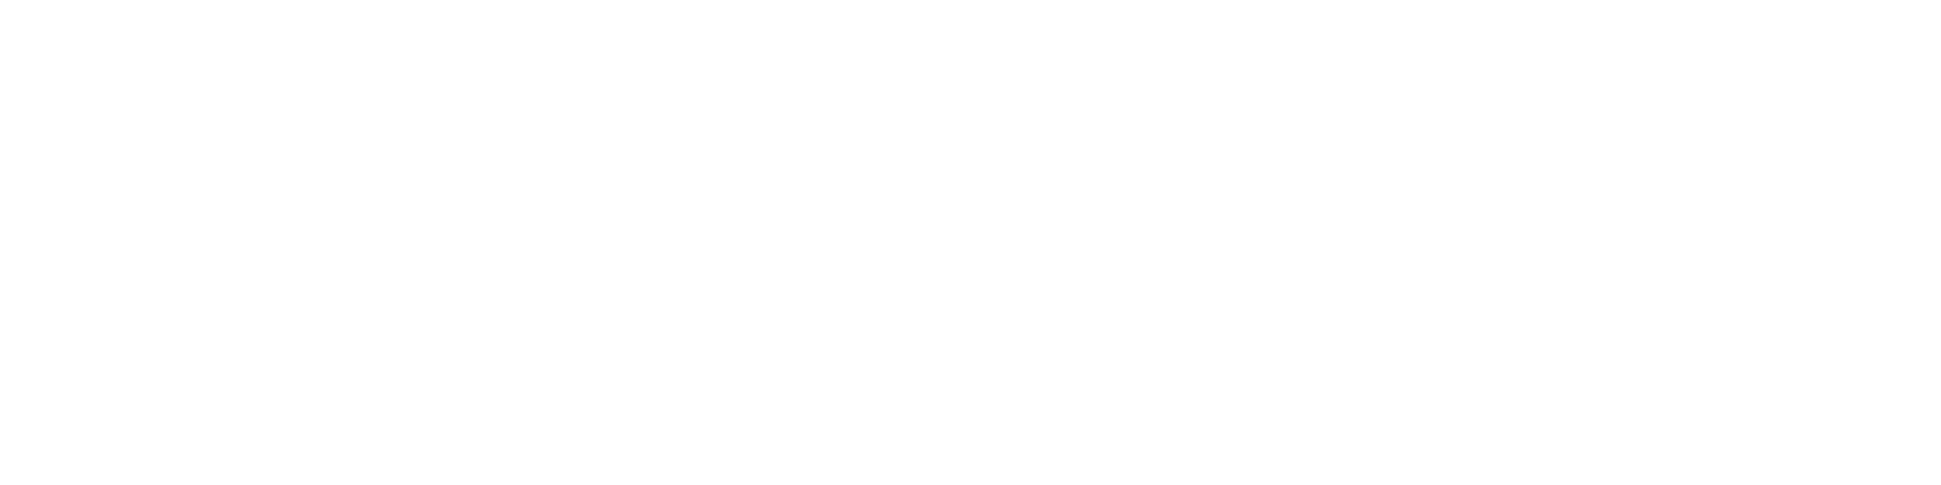 Crush white logo